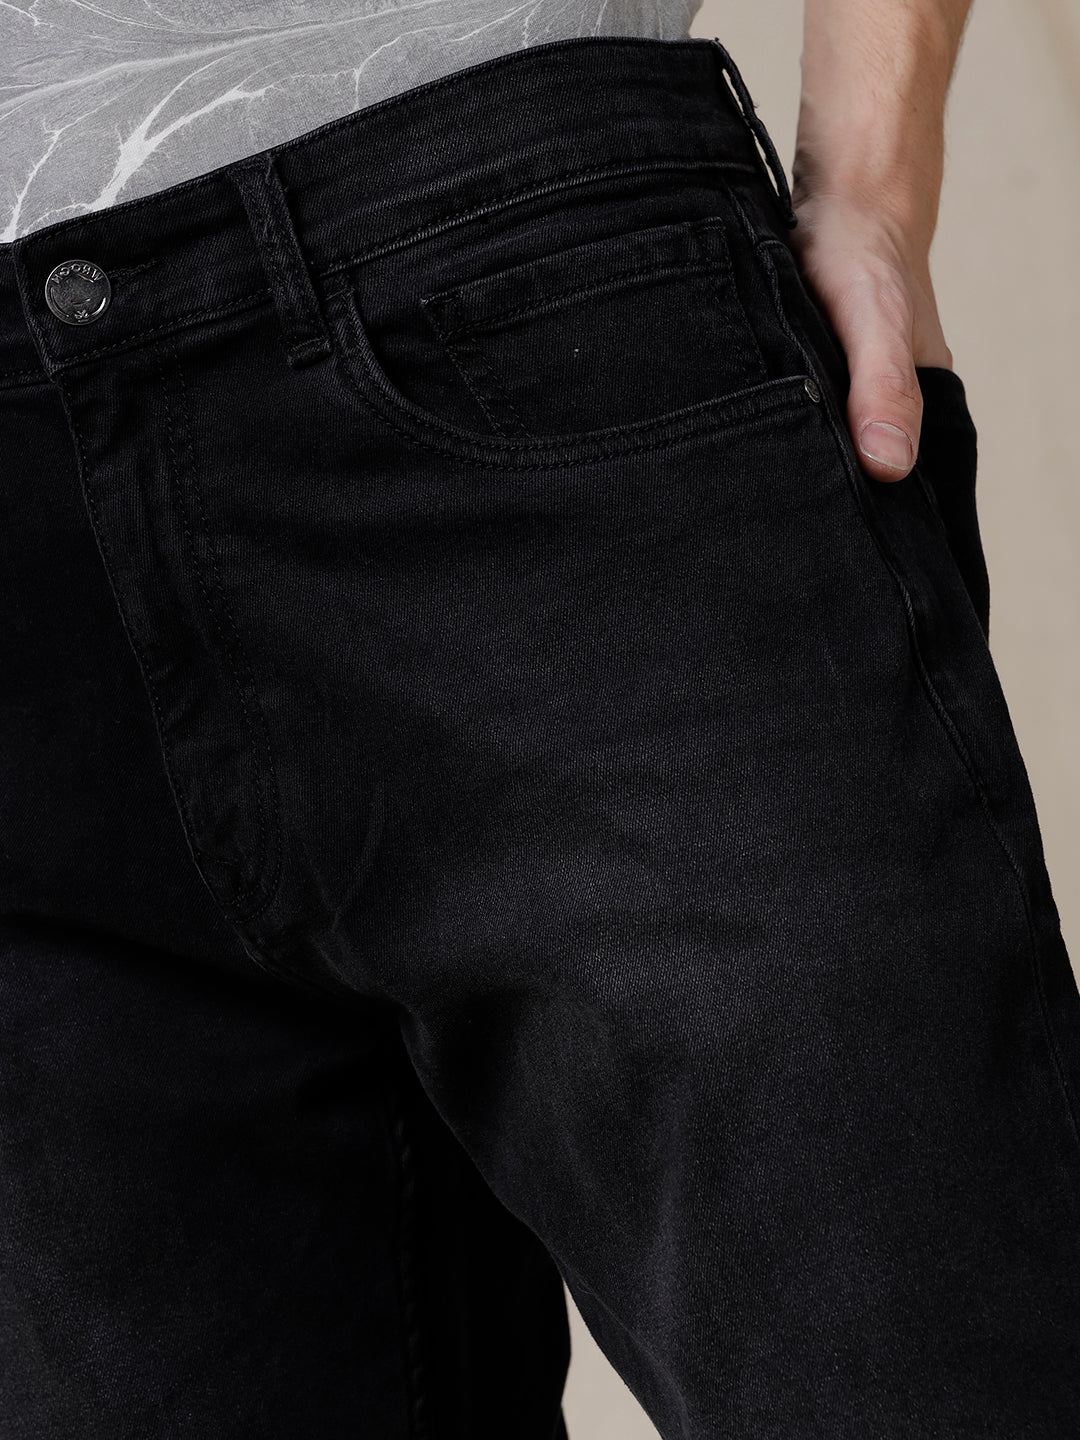 Black Anti Fit Faded Jeans